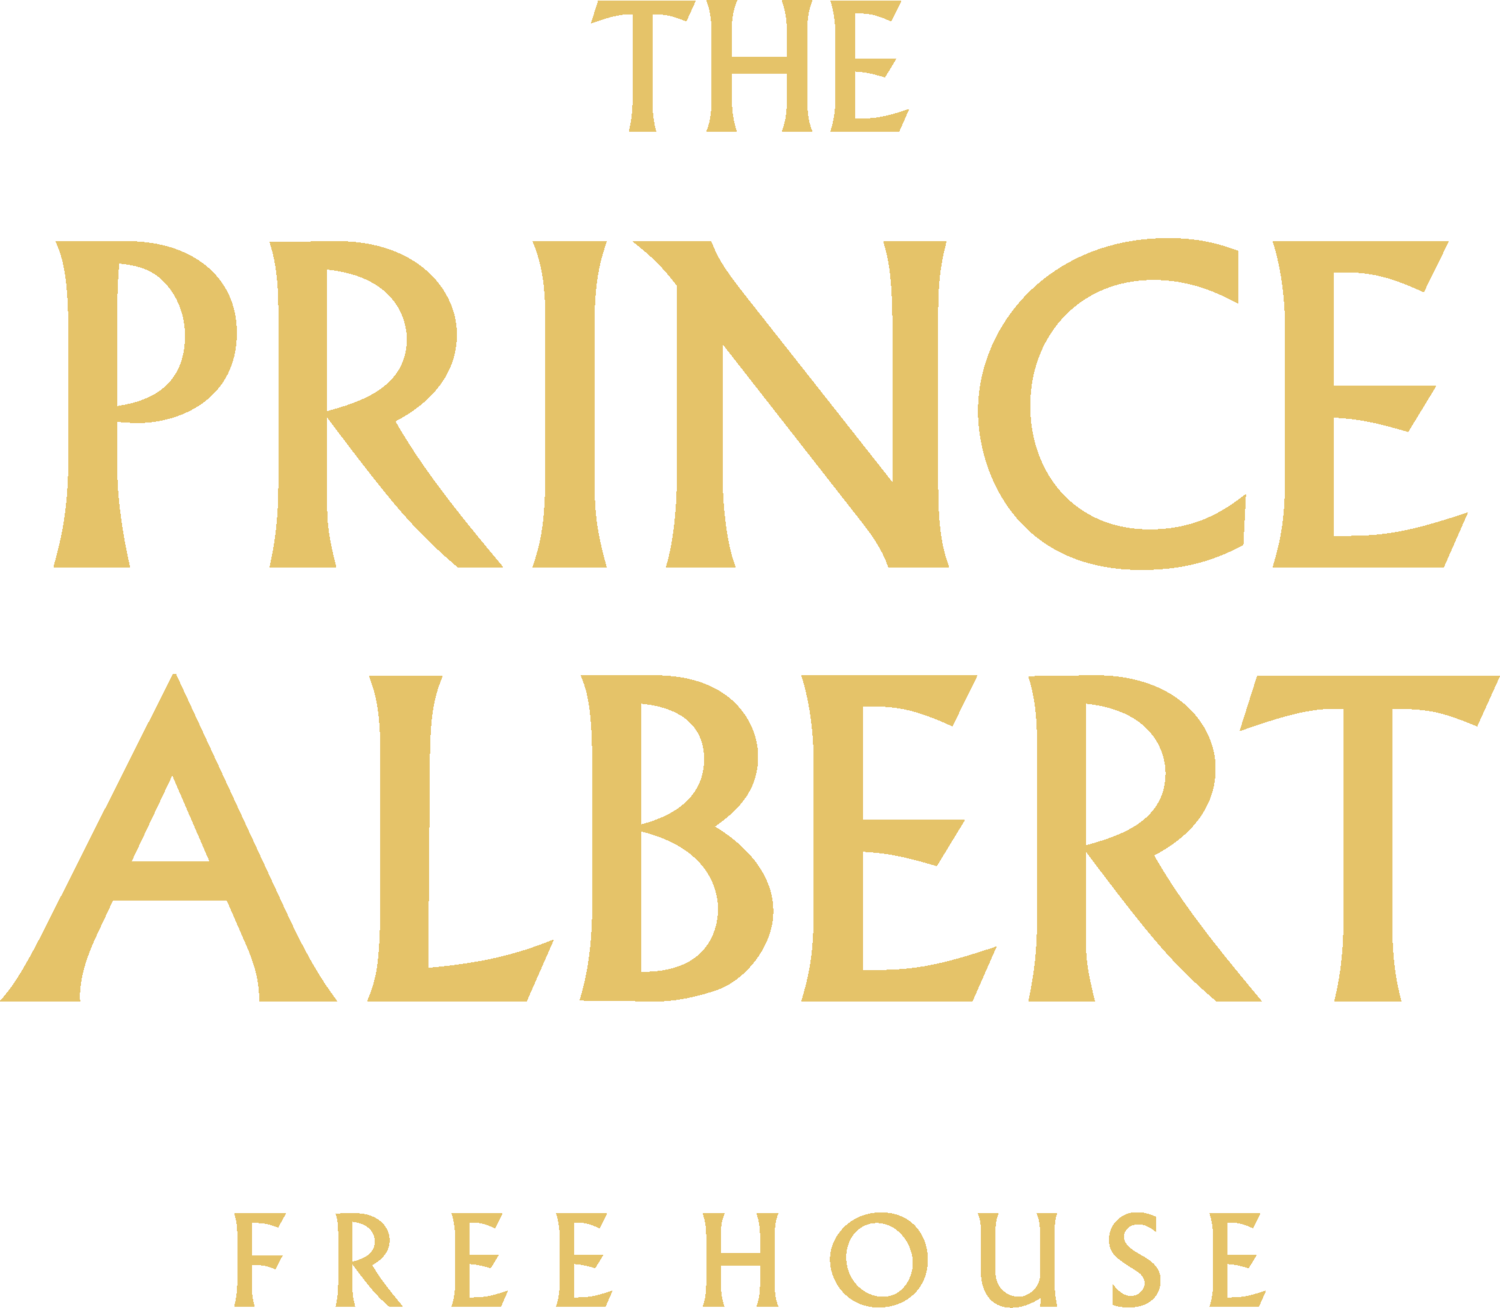 The Prince Albert